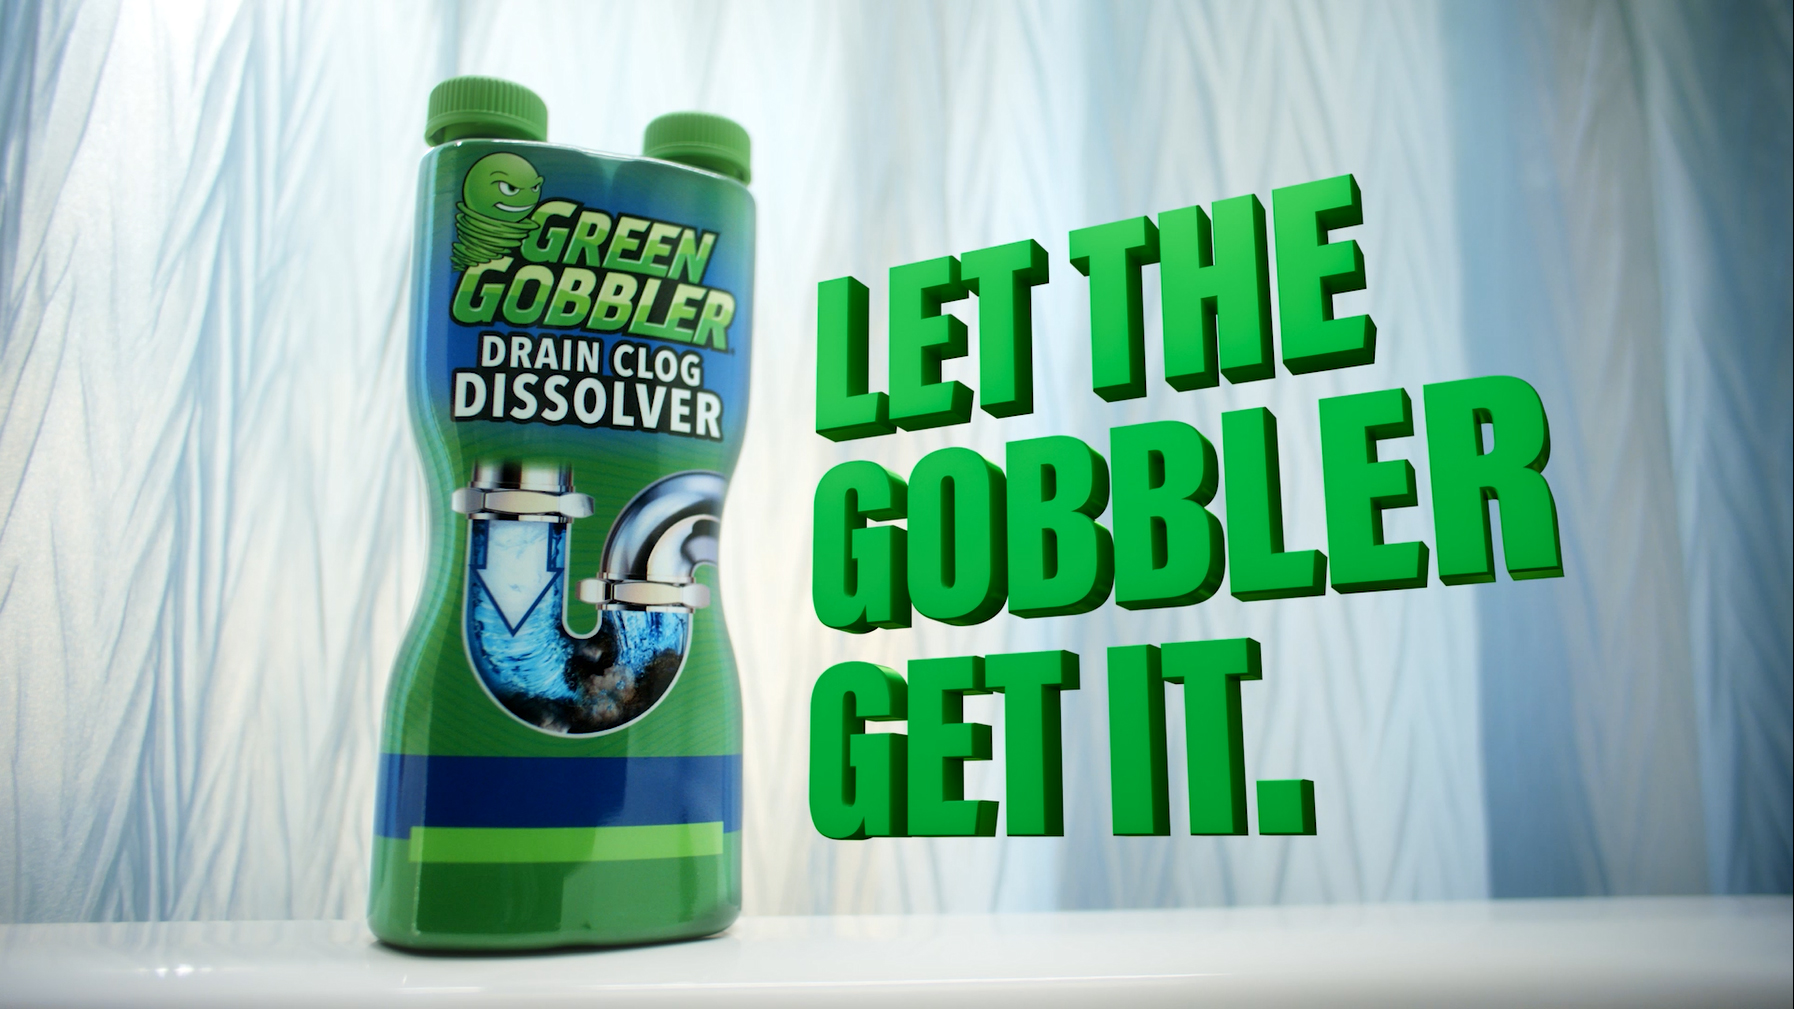 Green Gobbler Clog Remover Tool - 5 pack